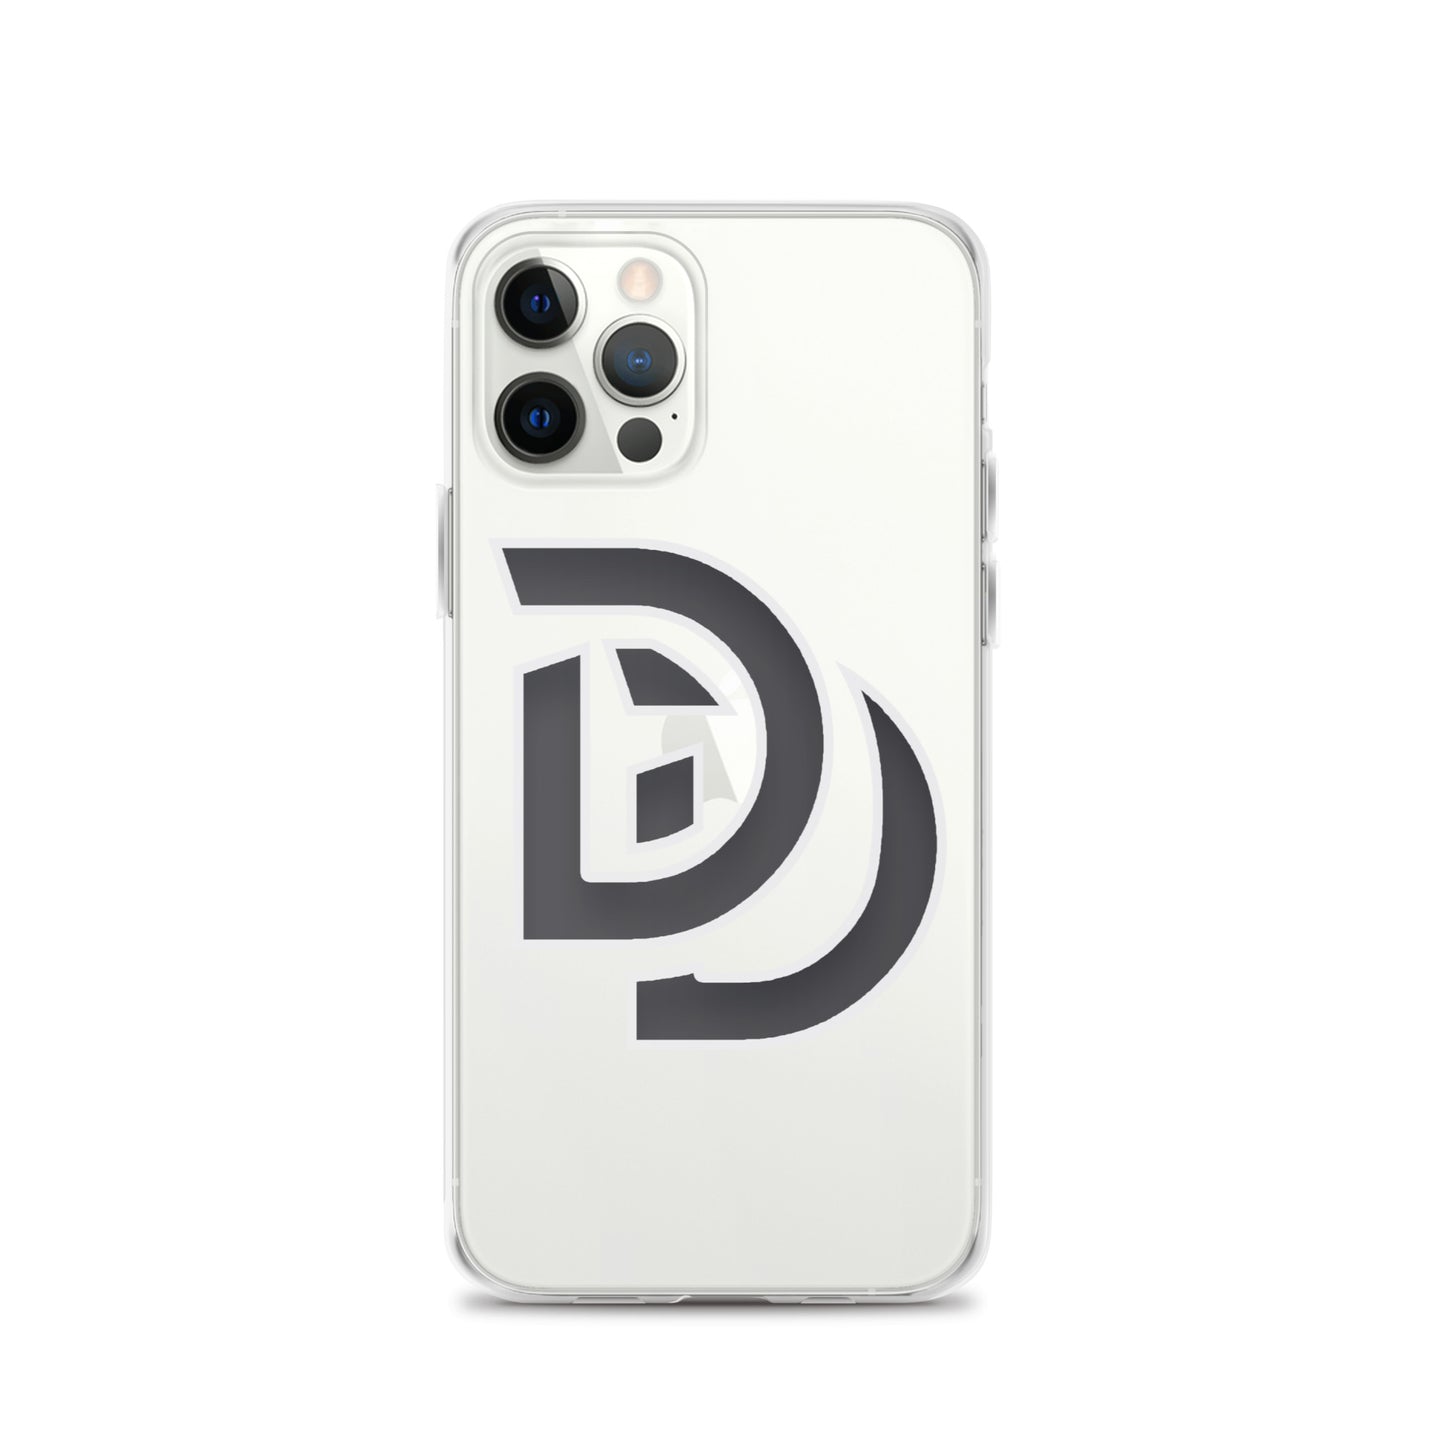 DD iPhone Case